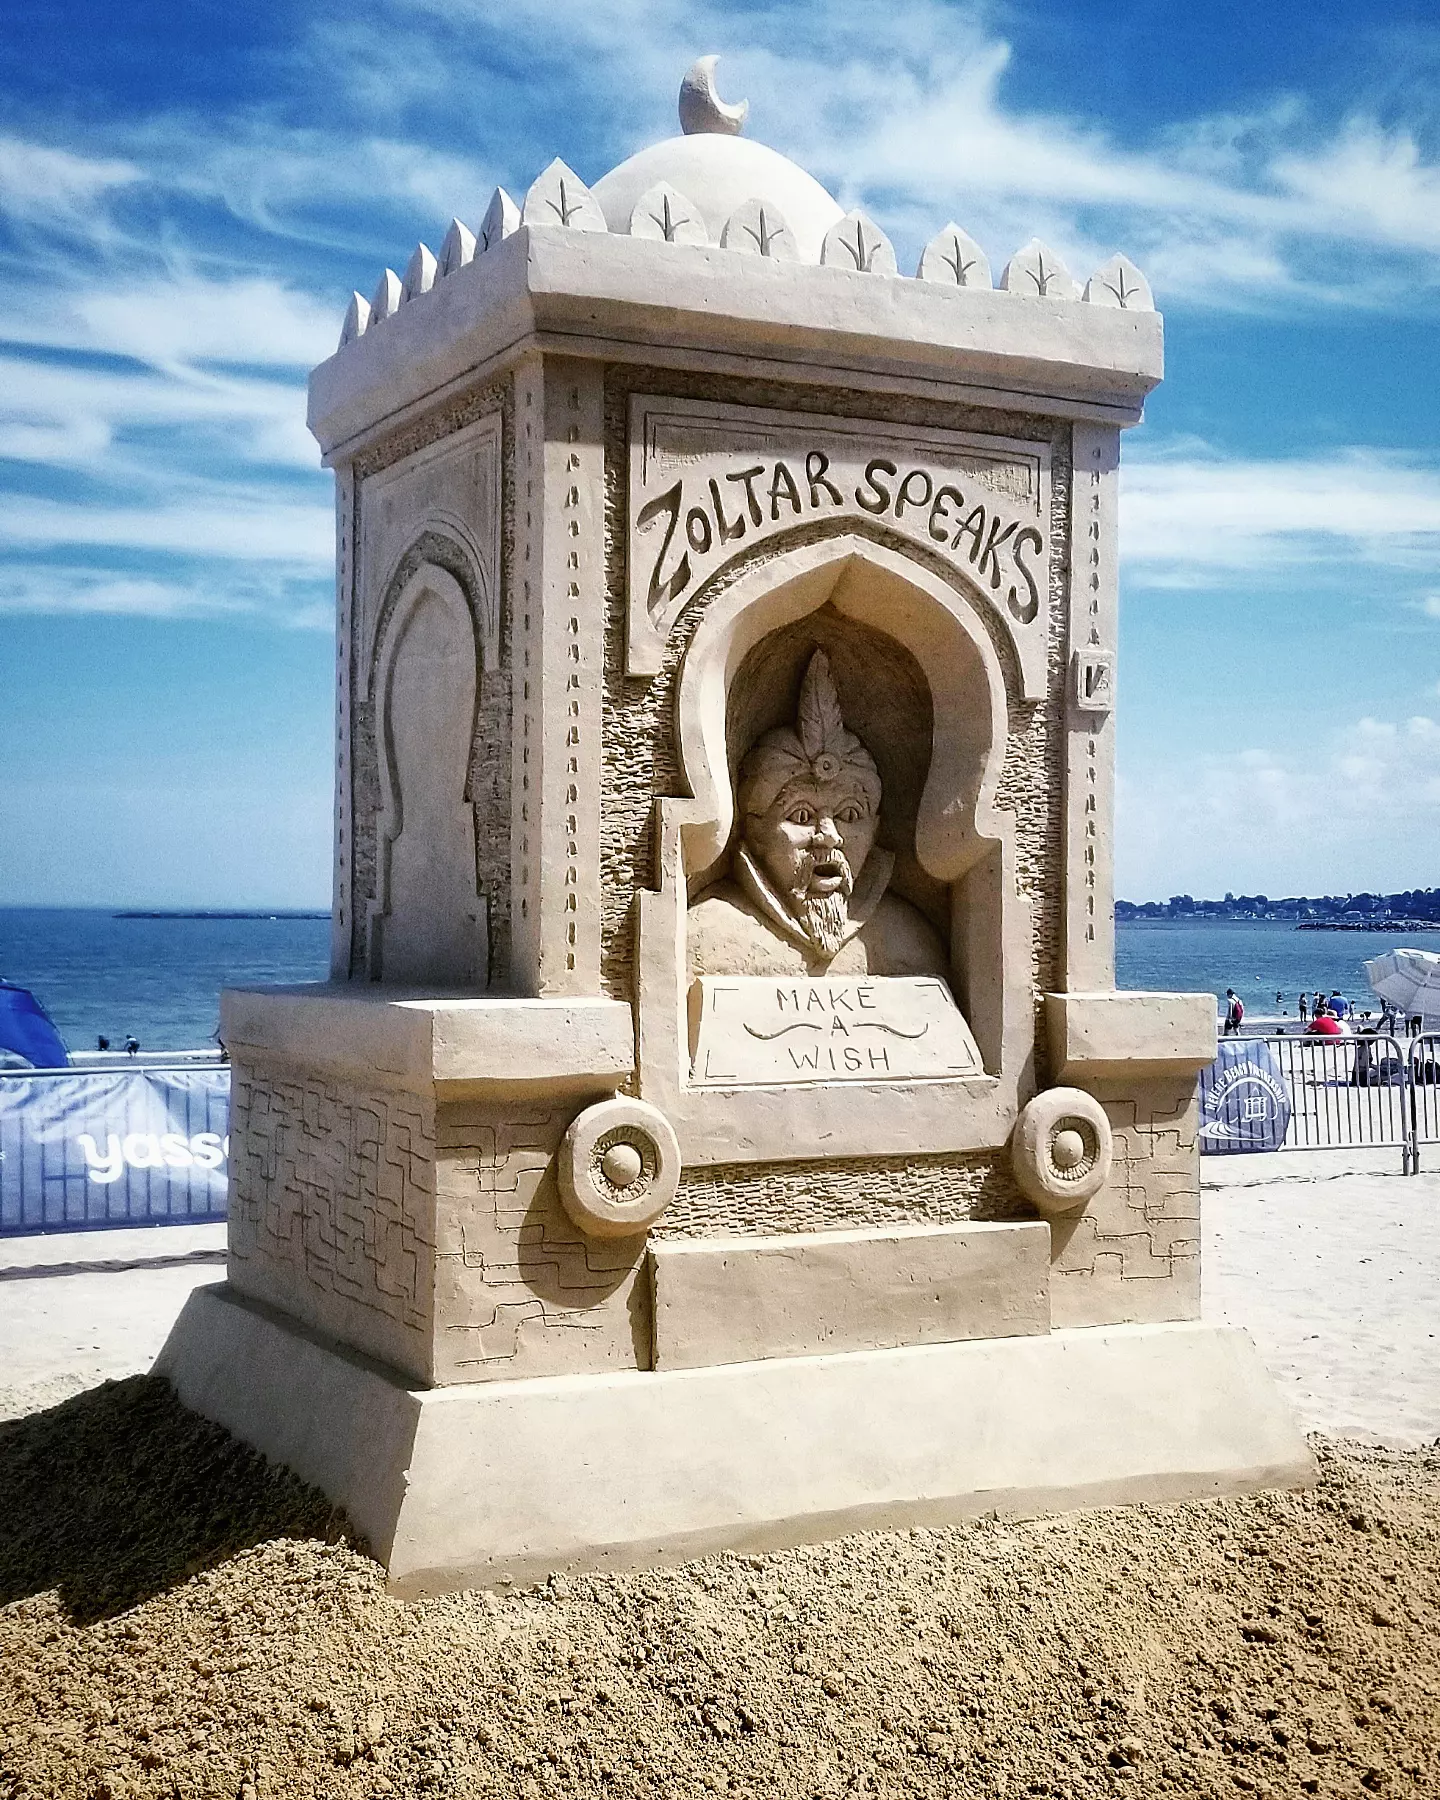 A Revere Beach Sand Sculpting artist shares secrets to making a sandcastle